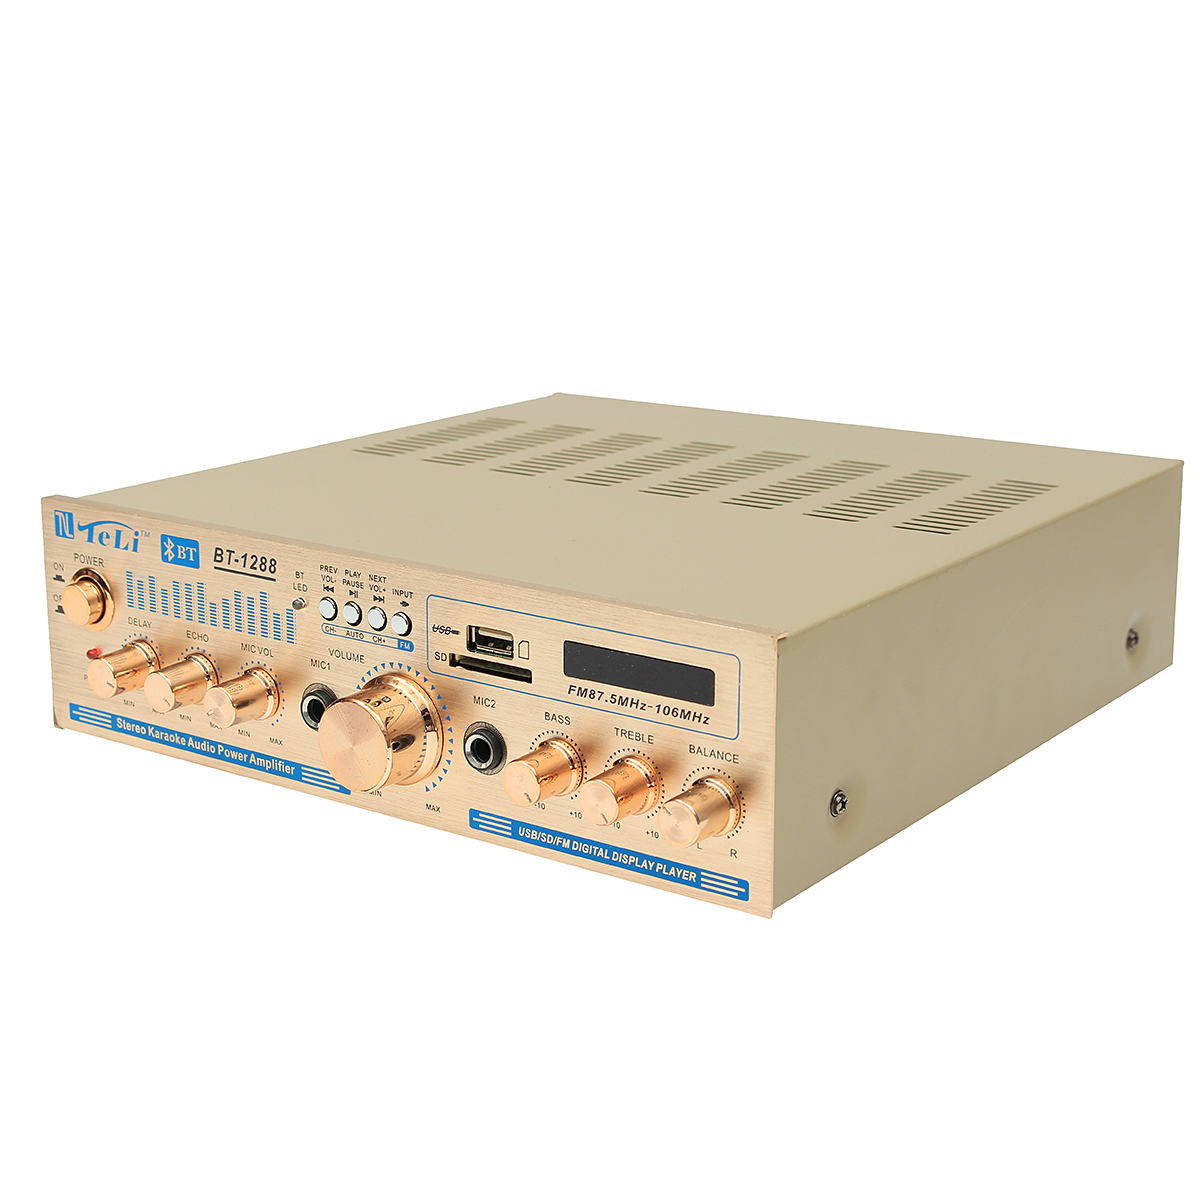 

Teli BT-1228 bluetooth 600W Karaoke Stereo 2CH Amplifier VU Meter Support FM USB SD with Remote